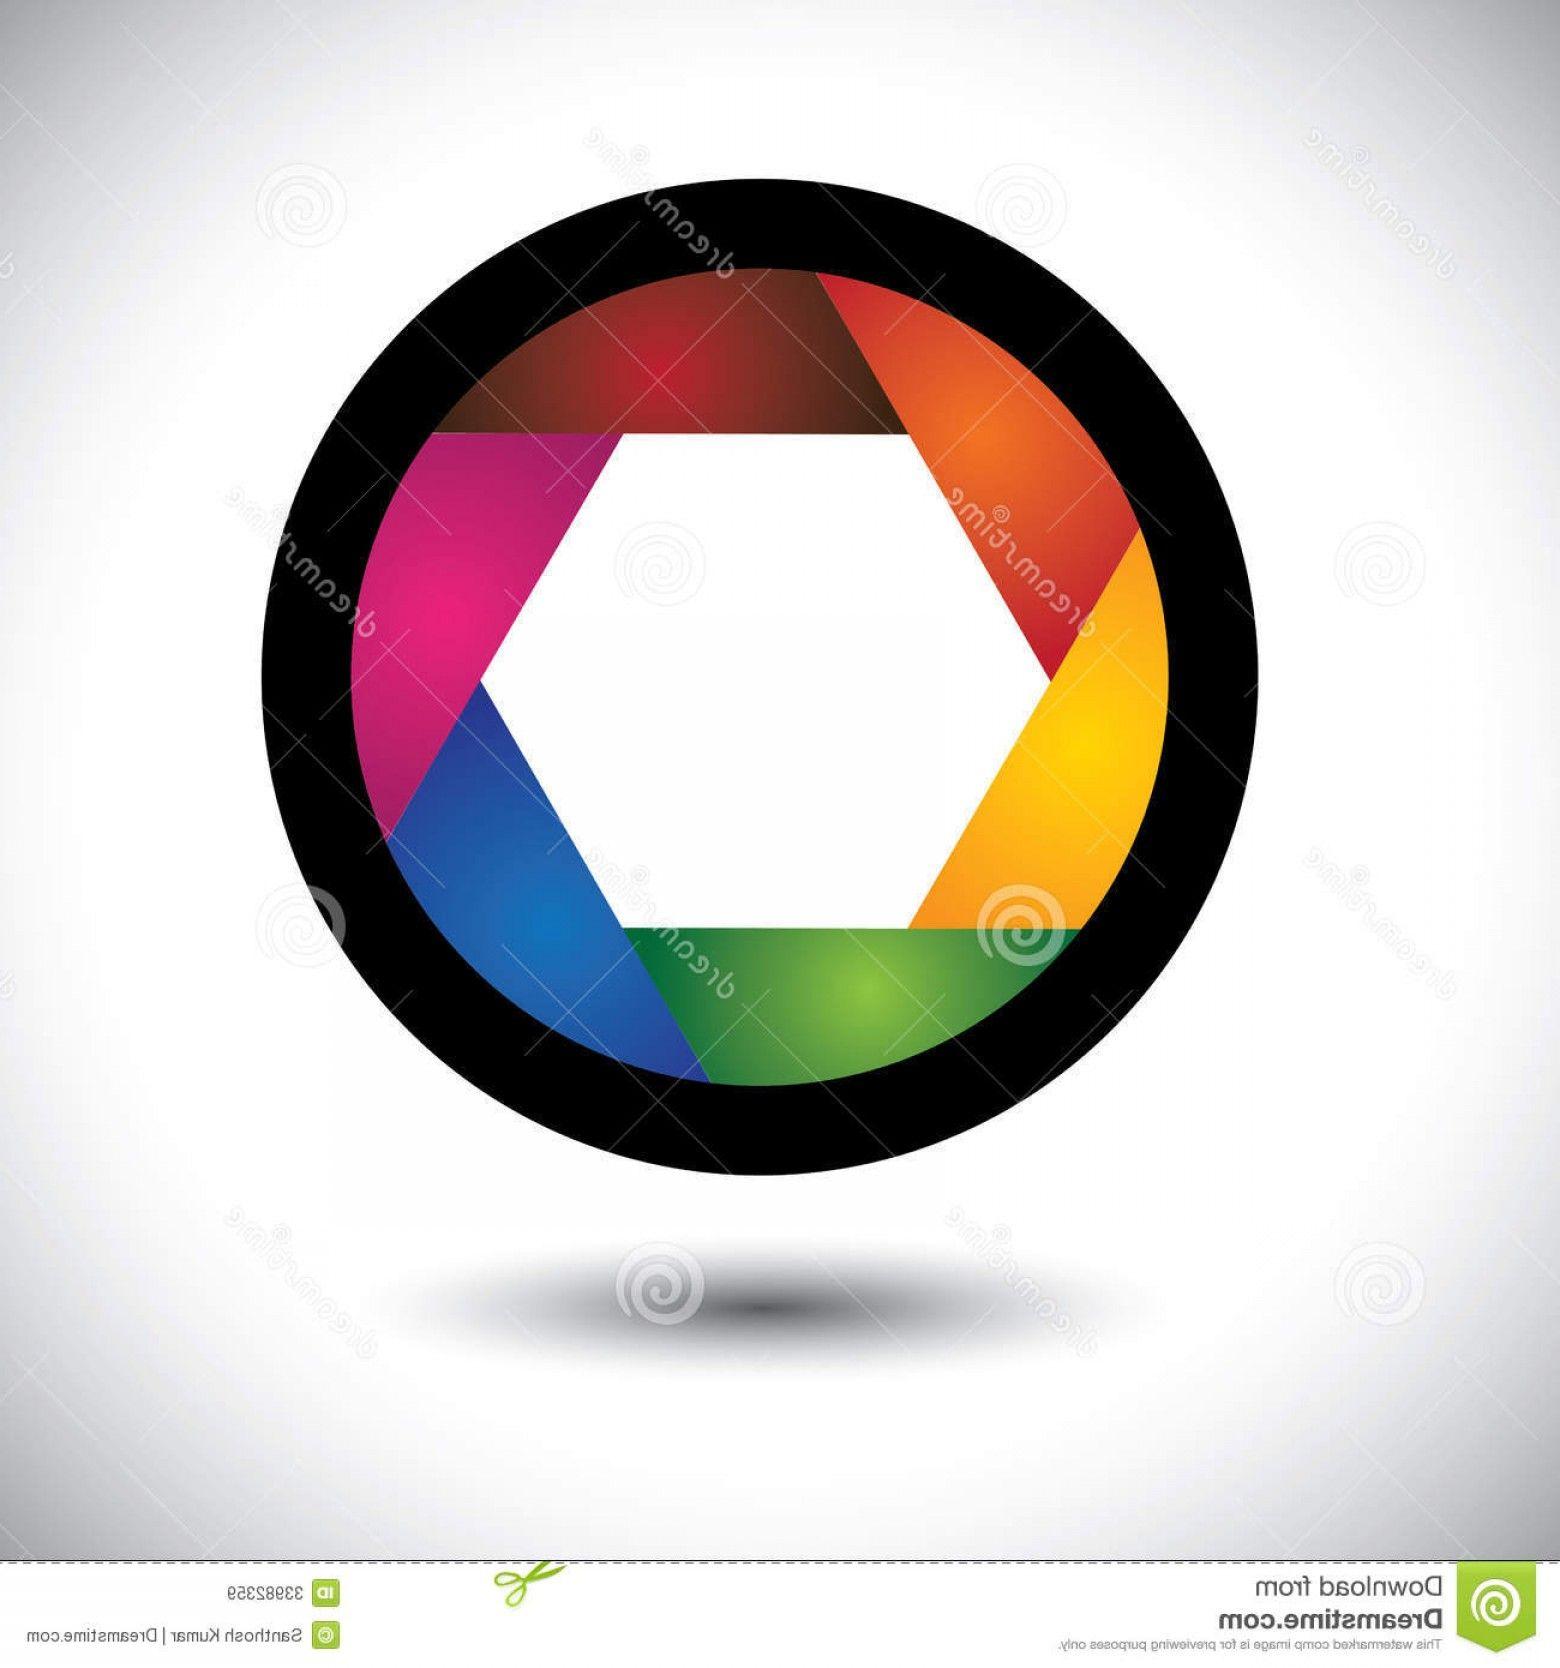 Colorful Camera Shutter Logo - Royalty Free Stock Images Abstract Colorful Camera Shutter Aperture ...